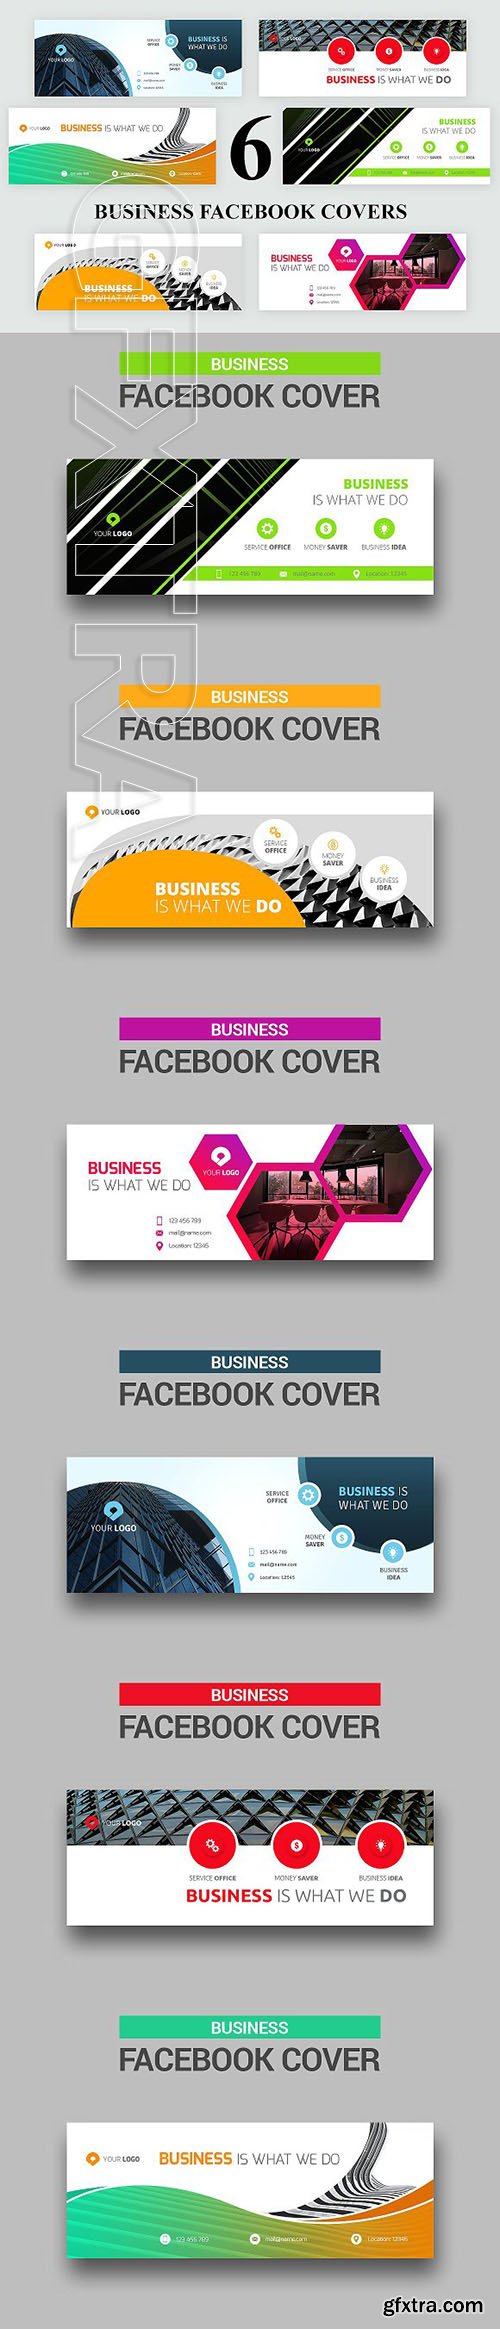 CreativeMarket - 6 Business Facebook Covers - v3 2418985